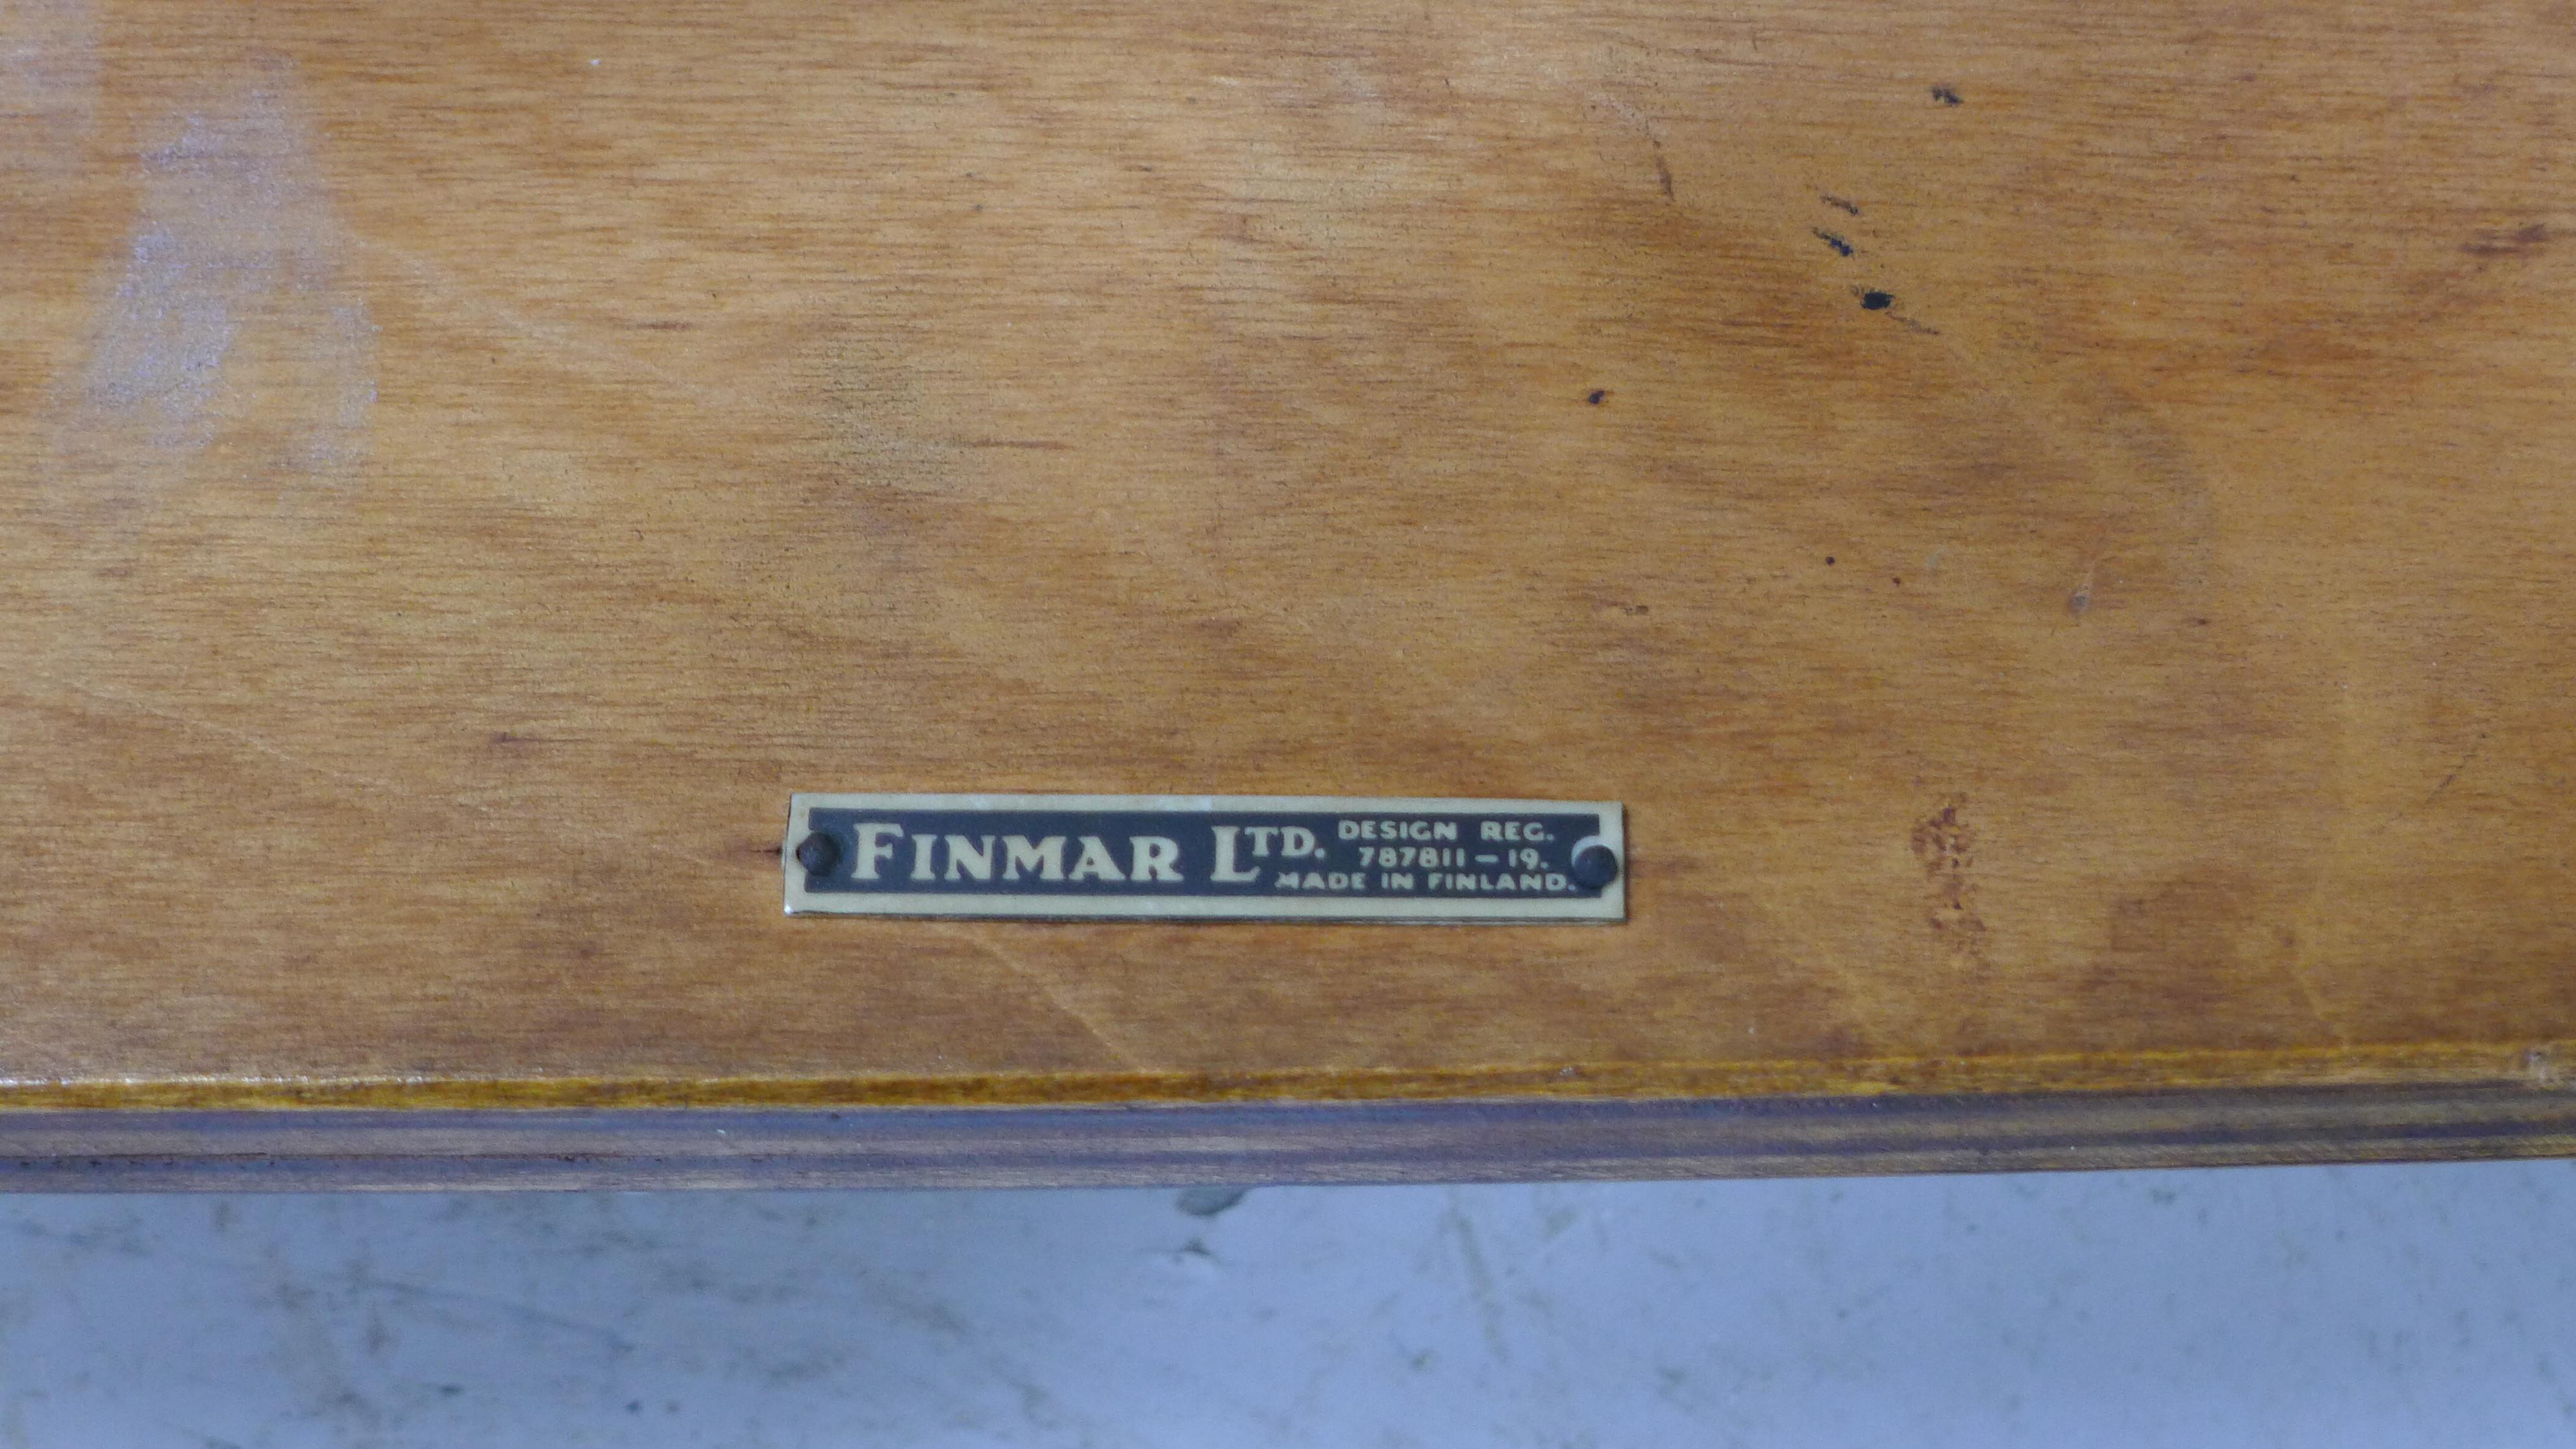 Finnish Alvar Aalto Type 21 Chair Molded Plywood, Finmar Label, 1930s